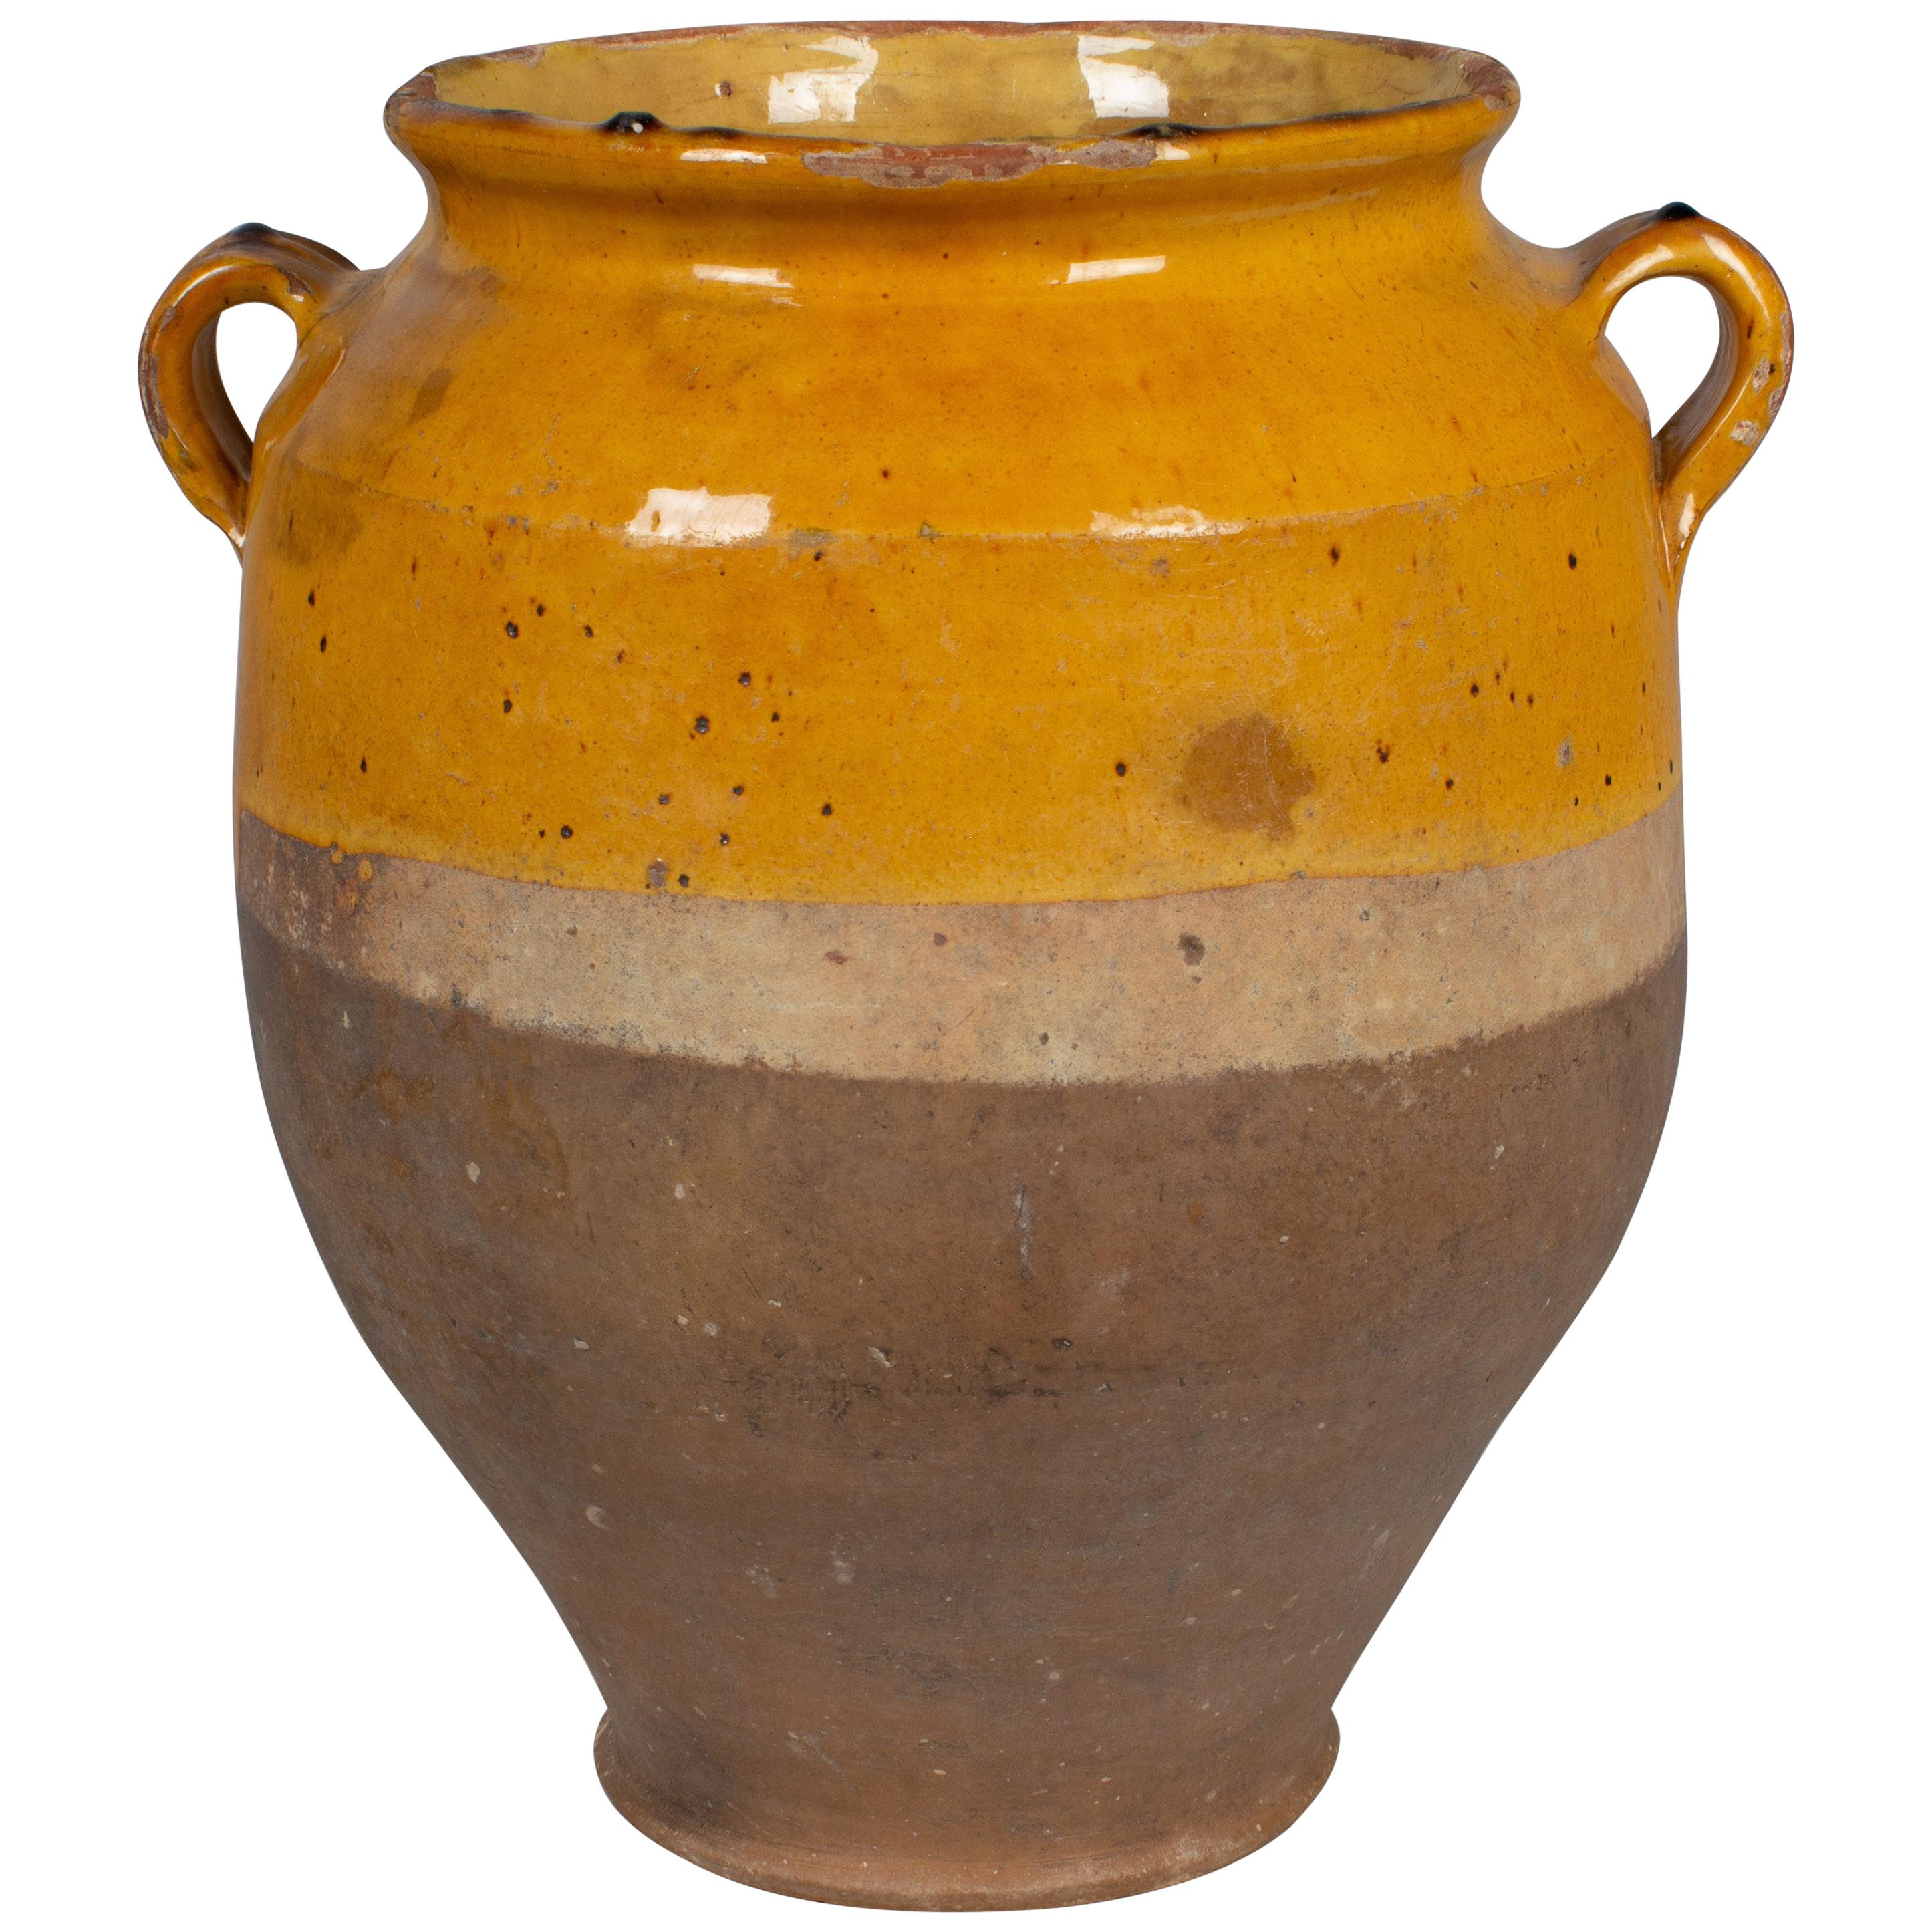 French Terracotta Confit Pot